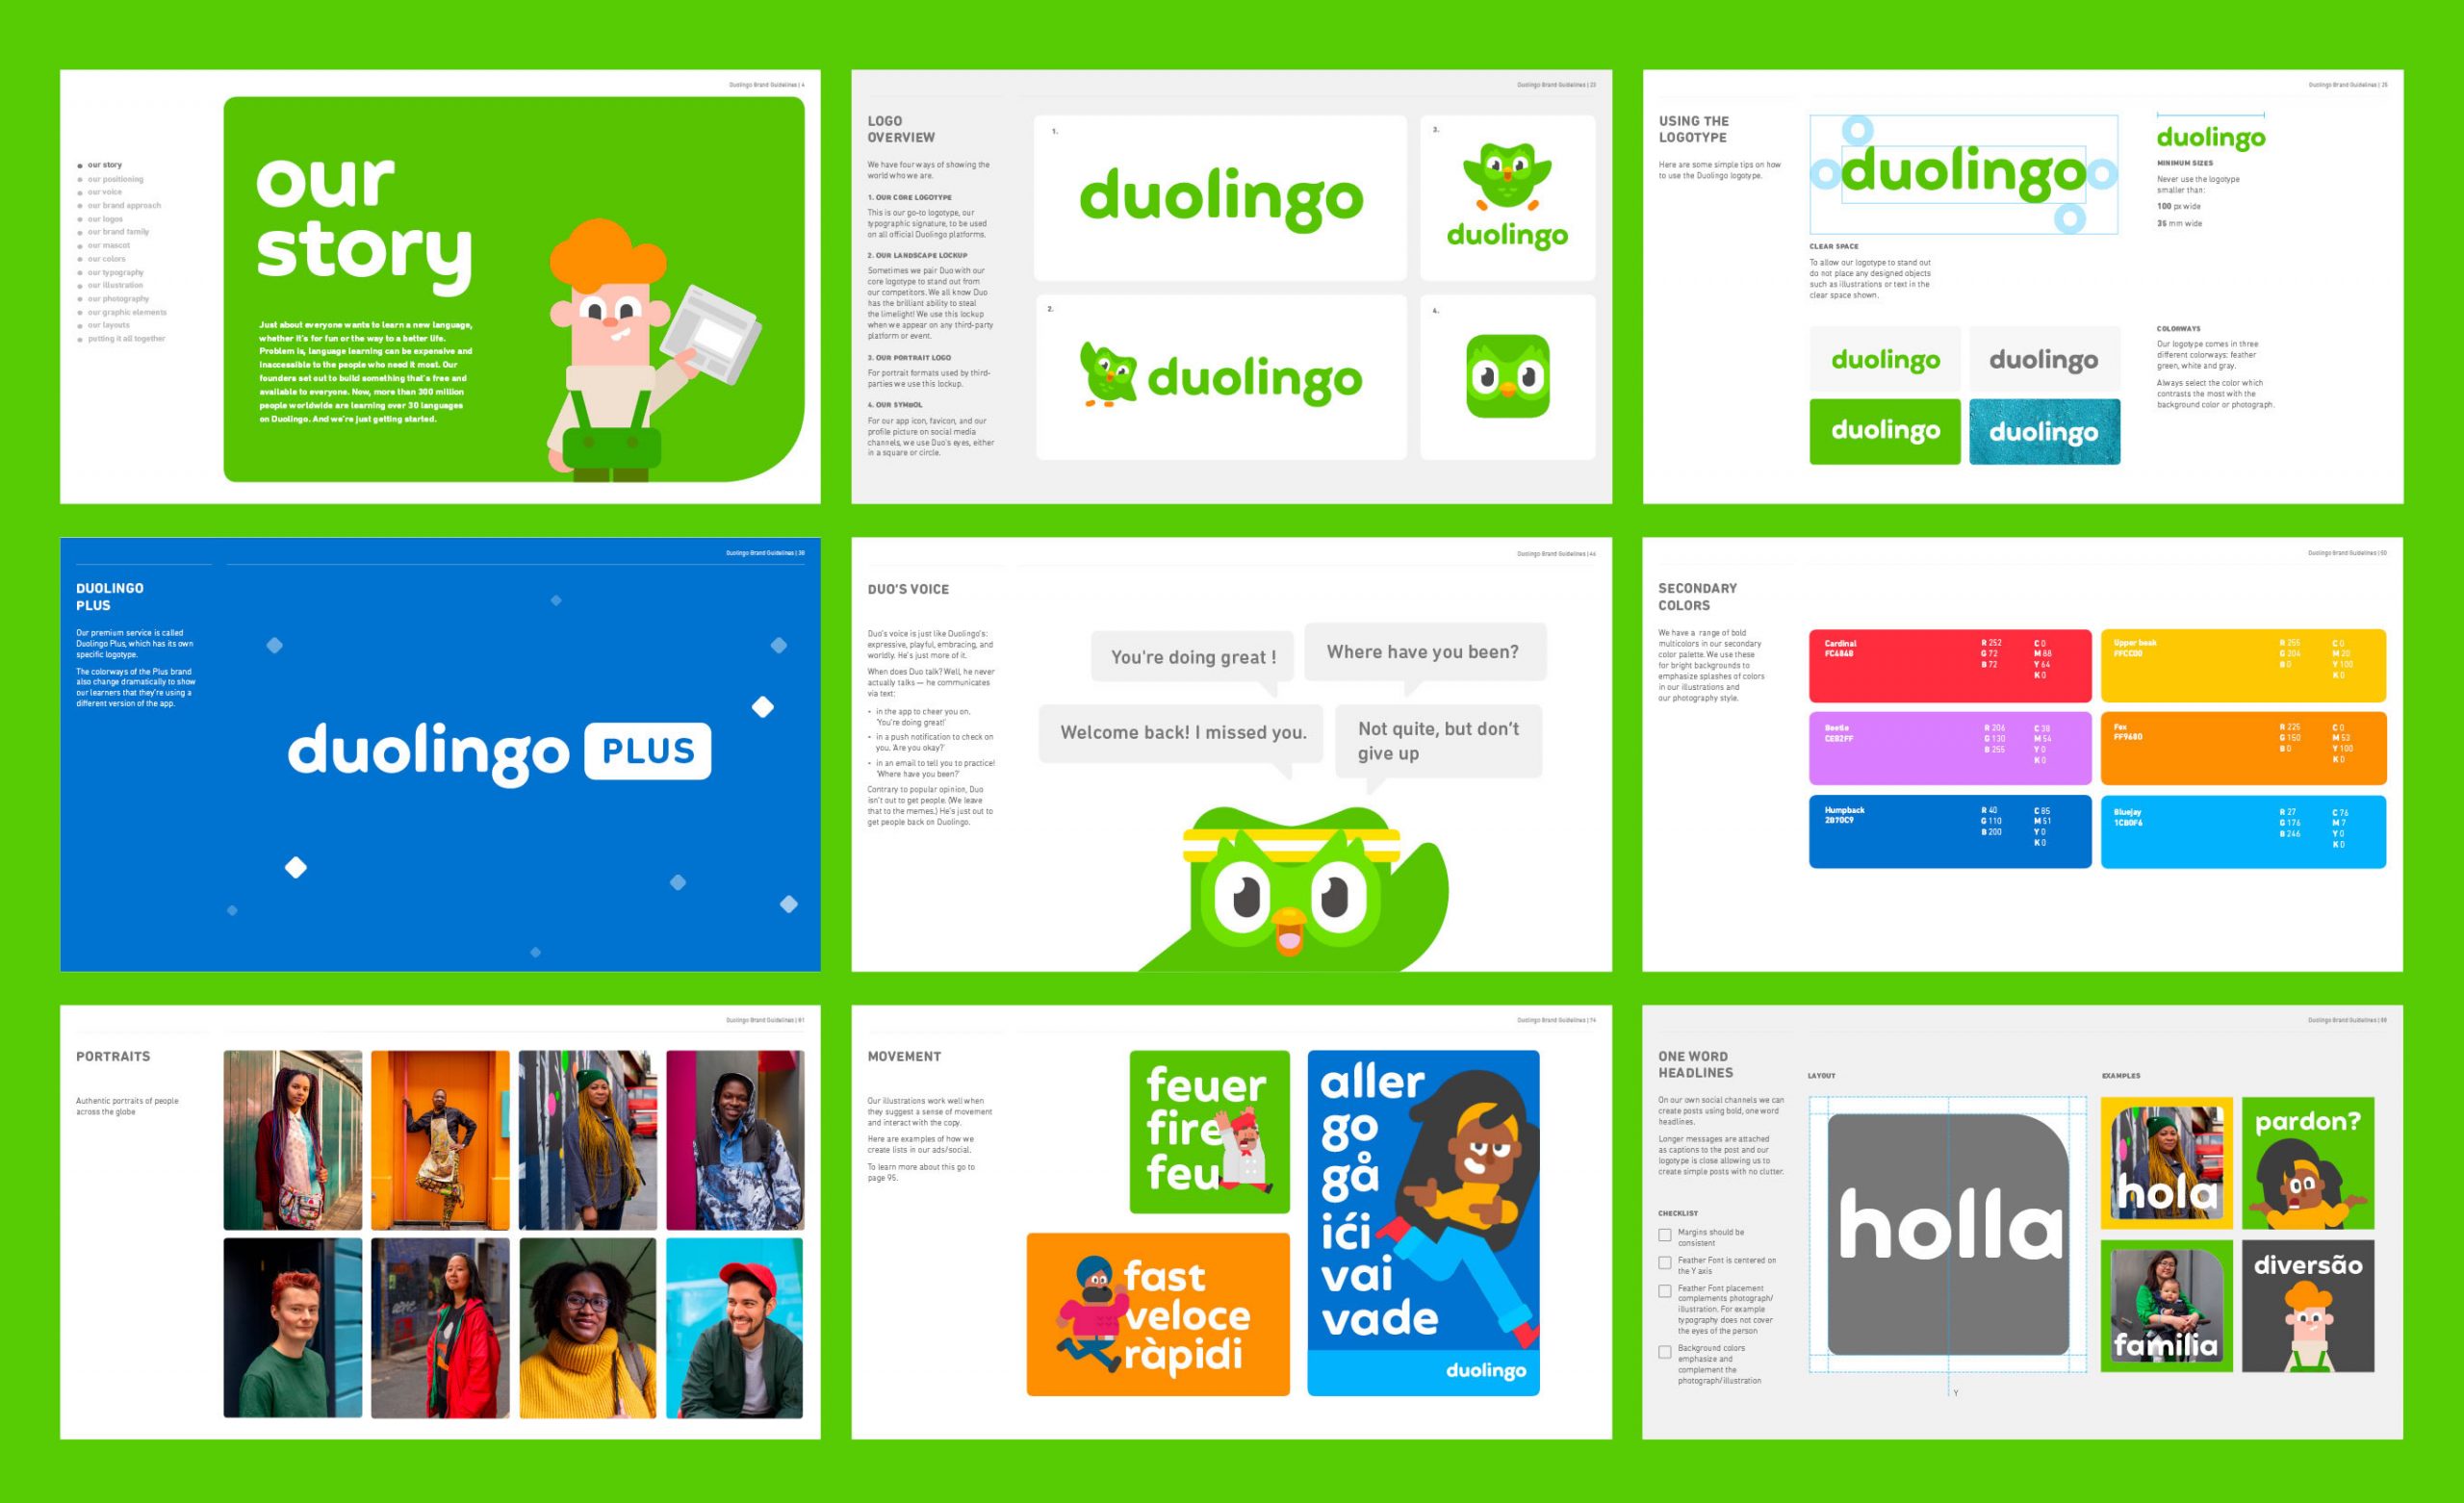 Duolingo_brand_guidelines-by-Johnson-Banks-1